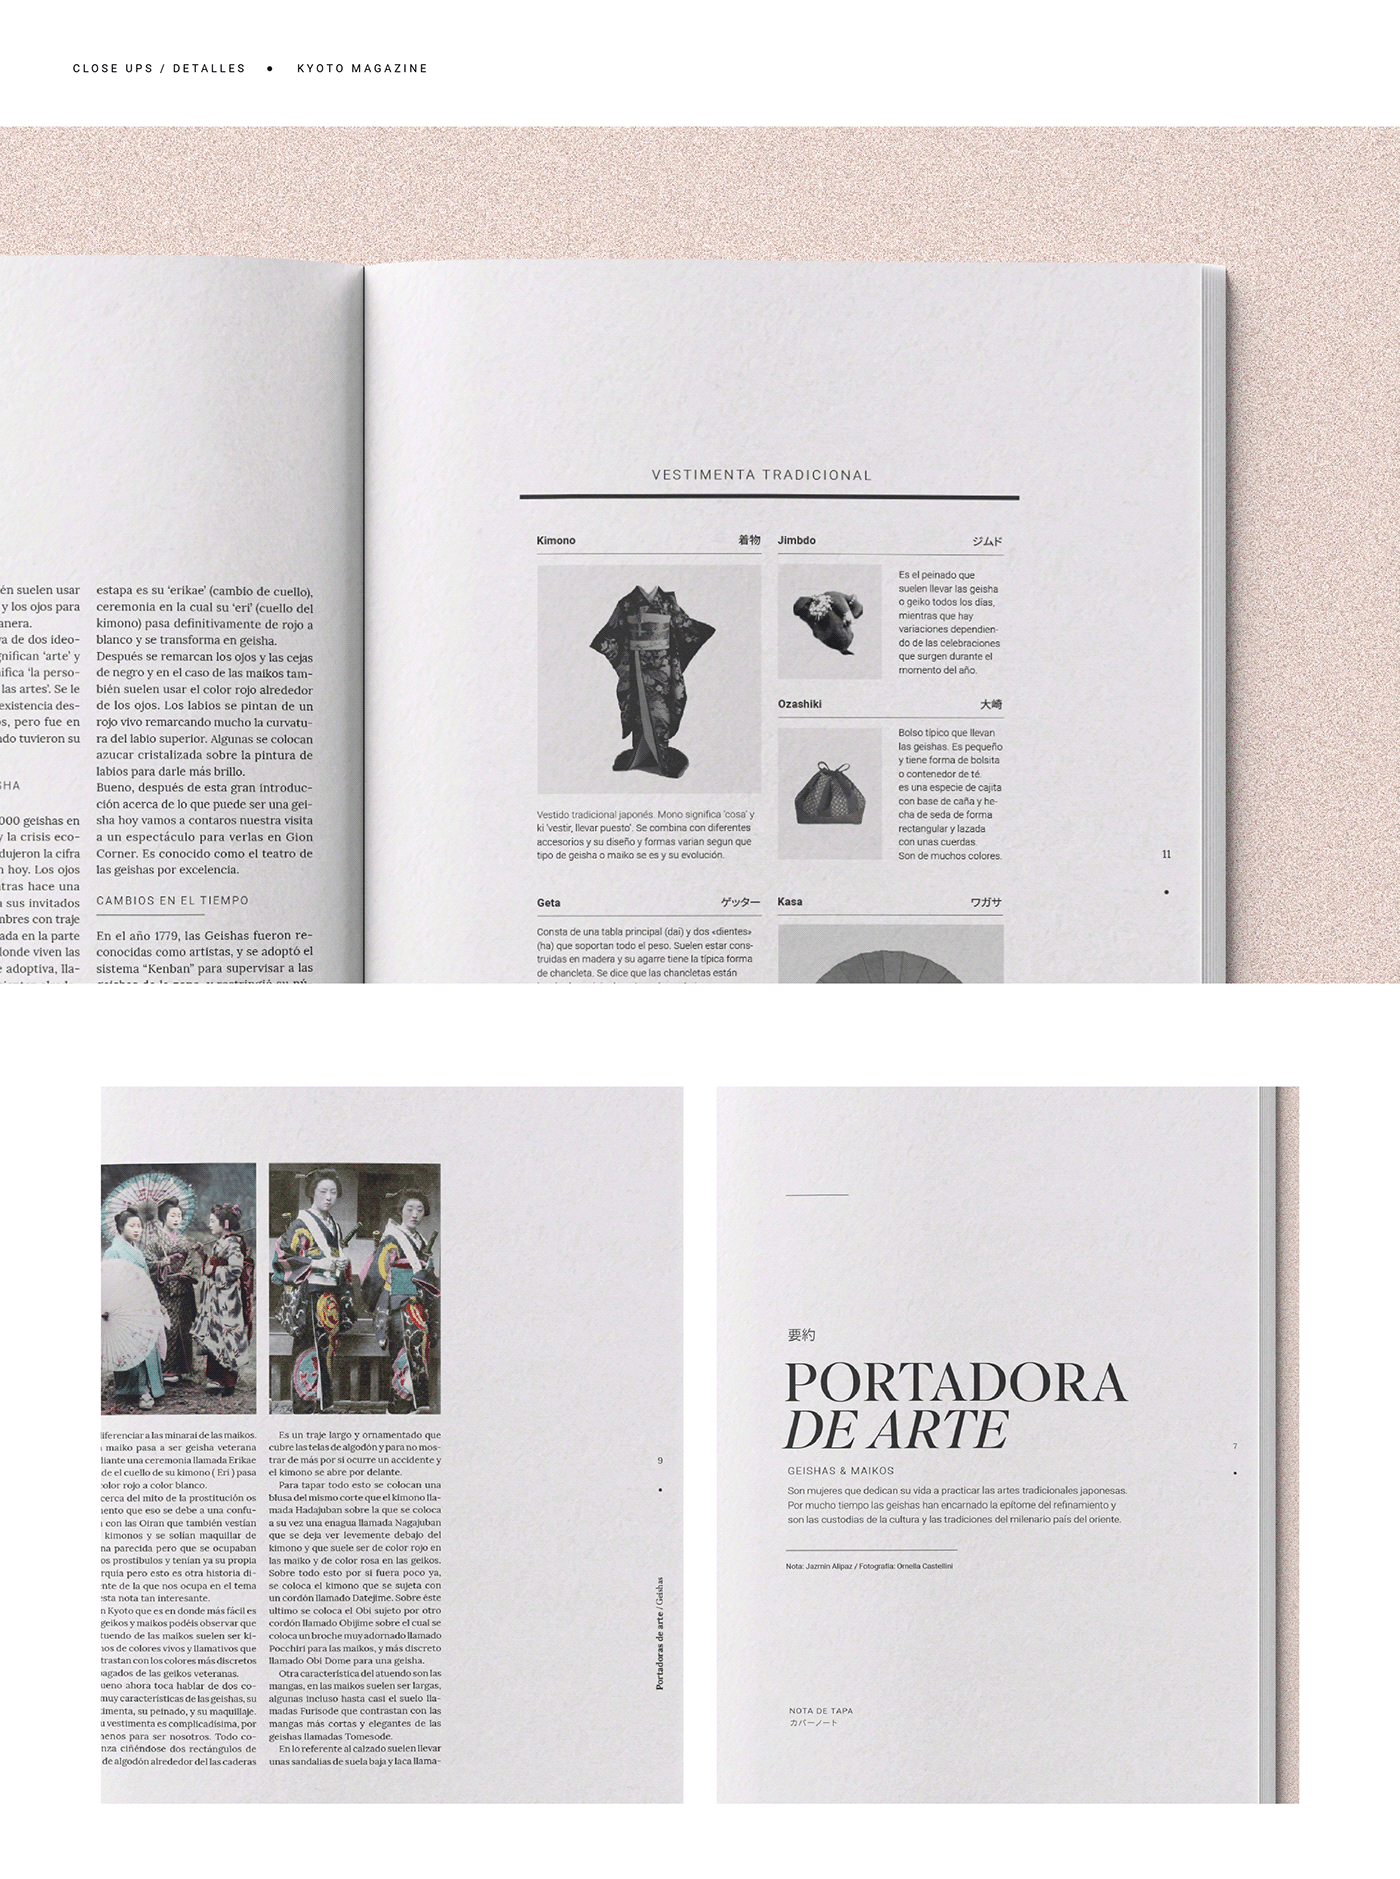 cosgaya editorial fadu japan kyoto magazine Diseño editorial editorial design  student project typography  